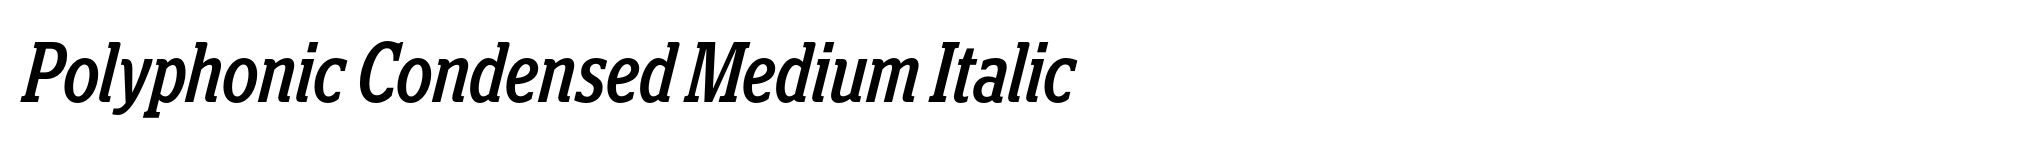 Polyphonic Condensed Medium Italic image